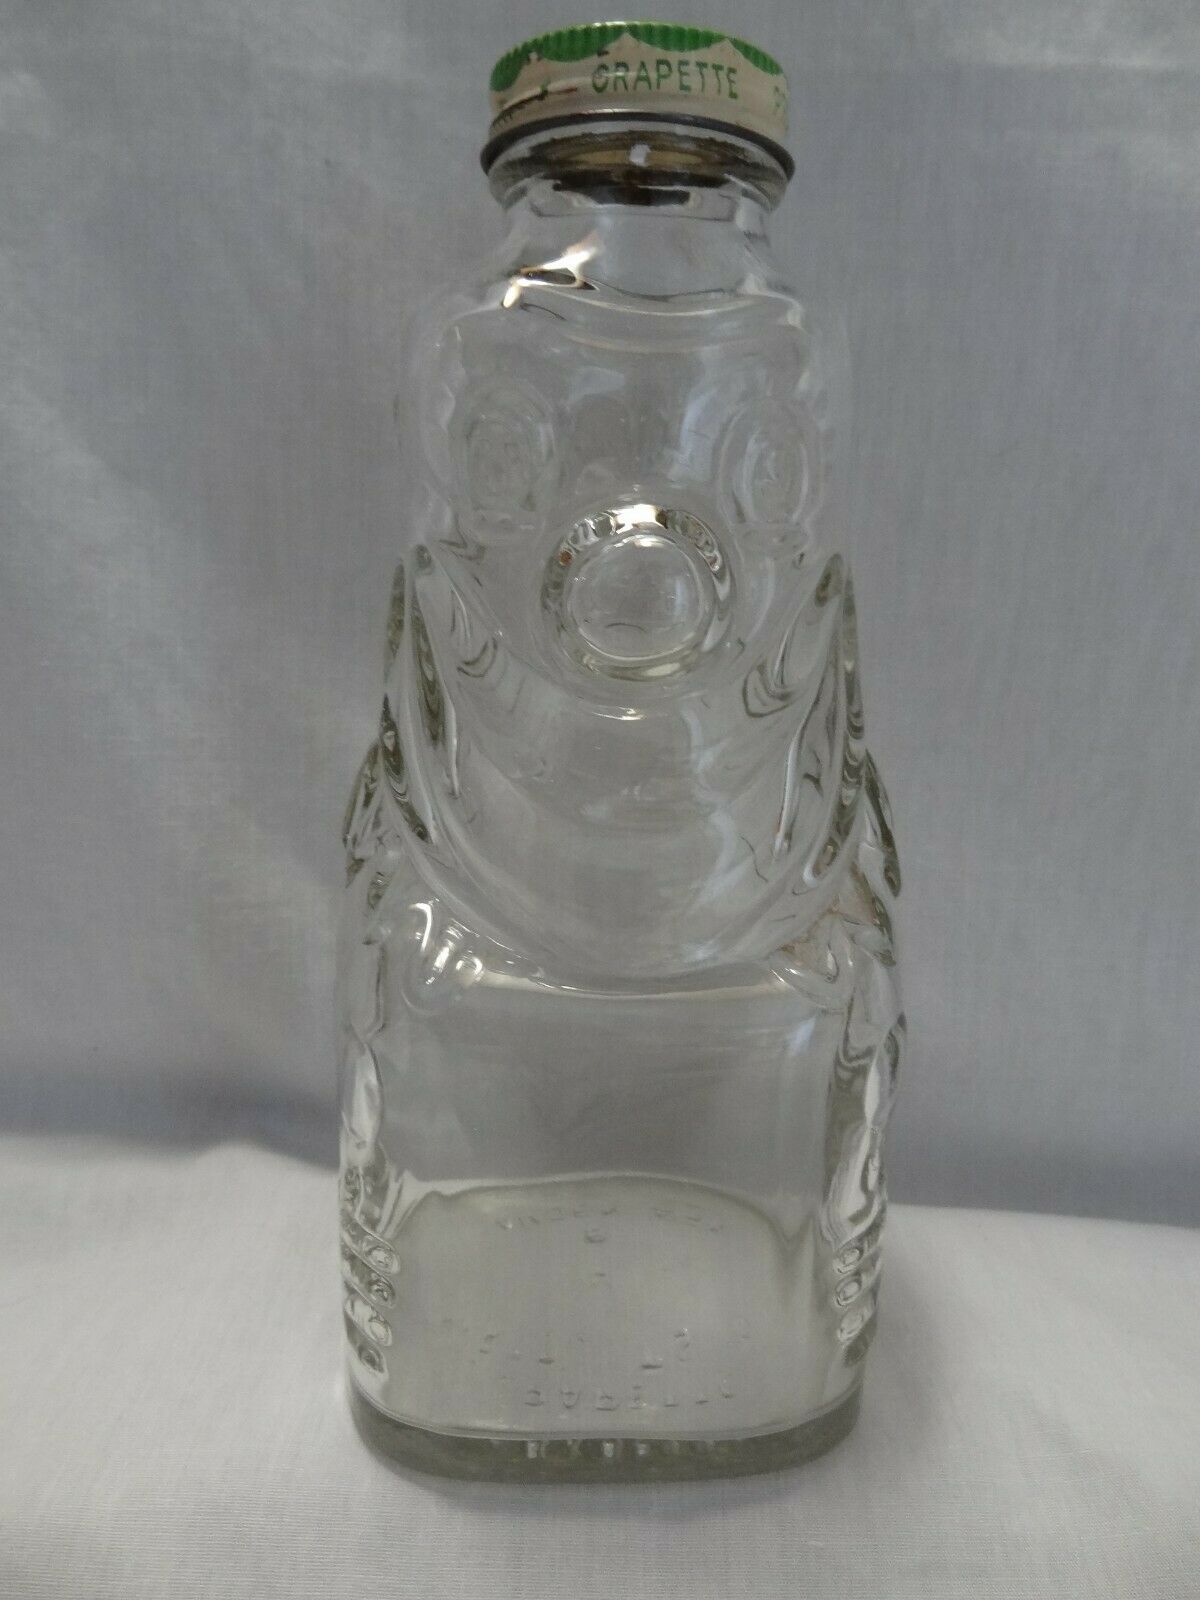 Vintage 1950s Grapette Glass Clown Bottle with Coin Slot Lid